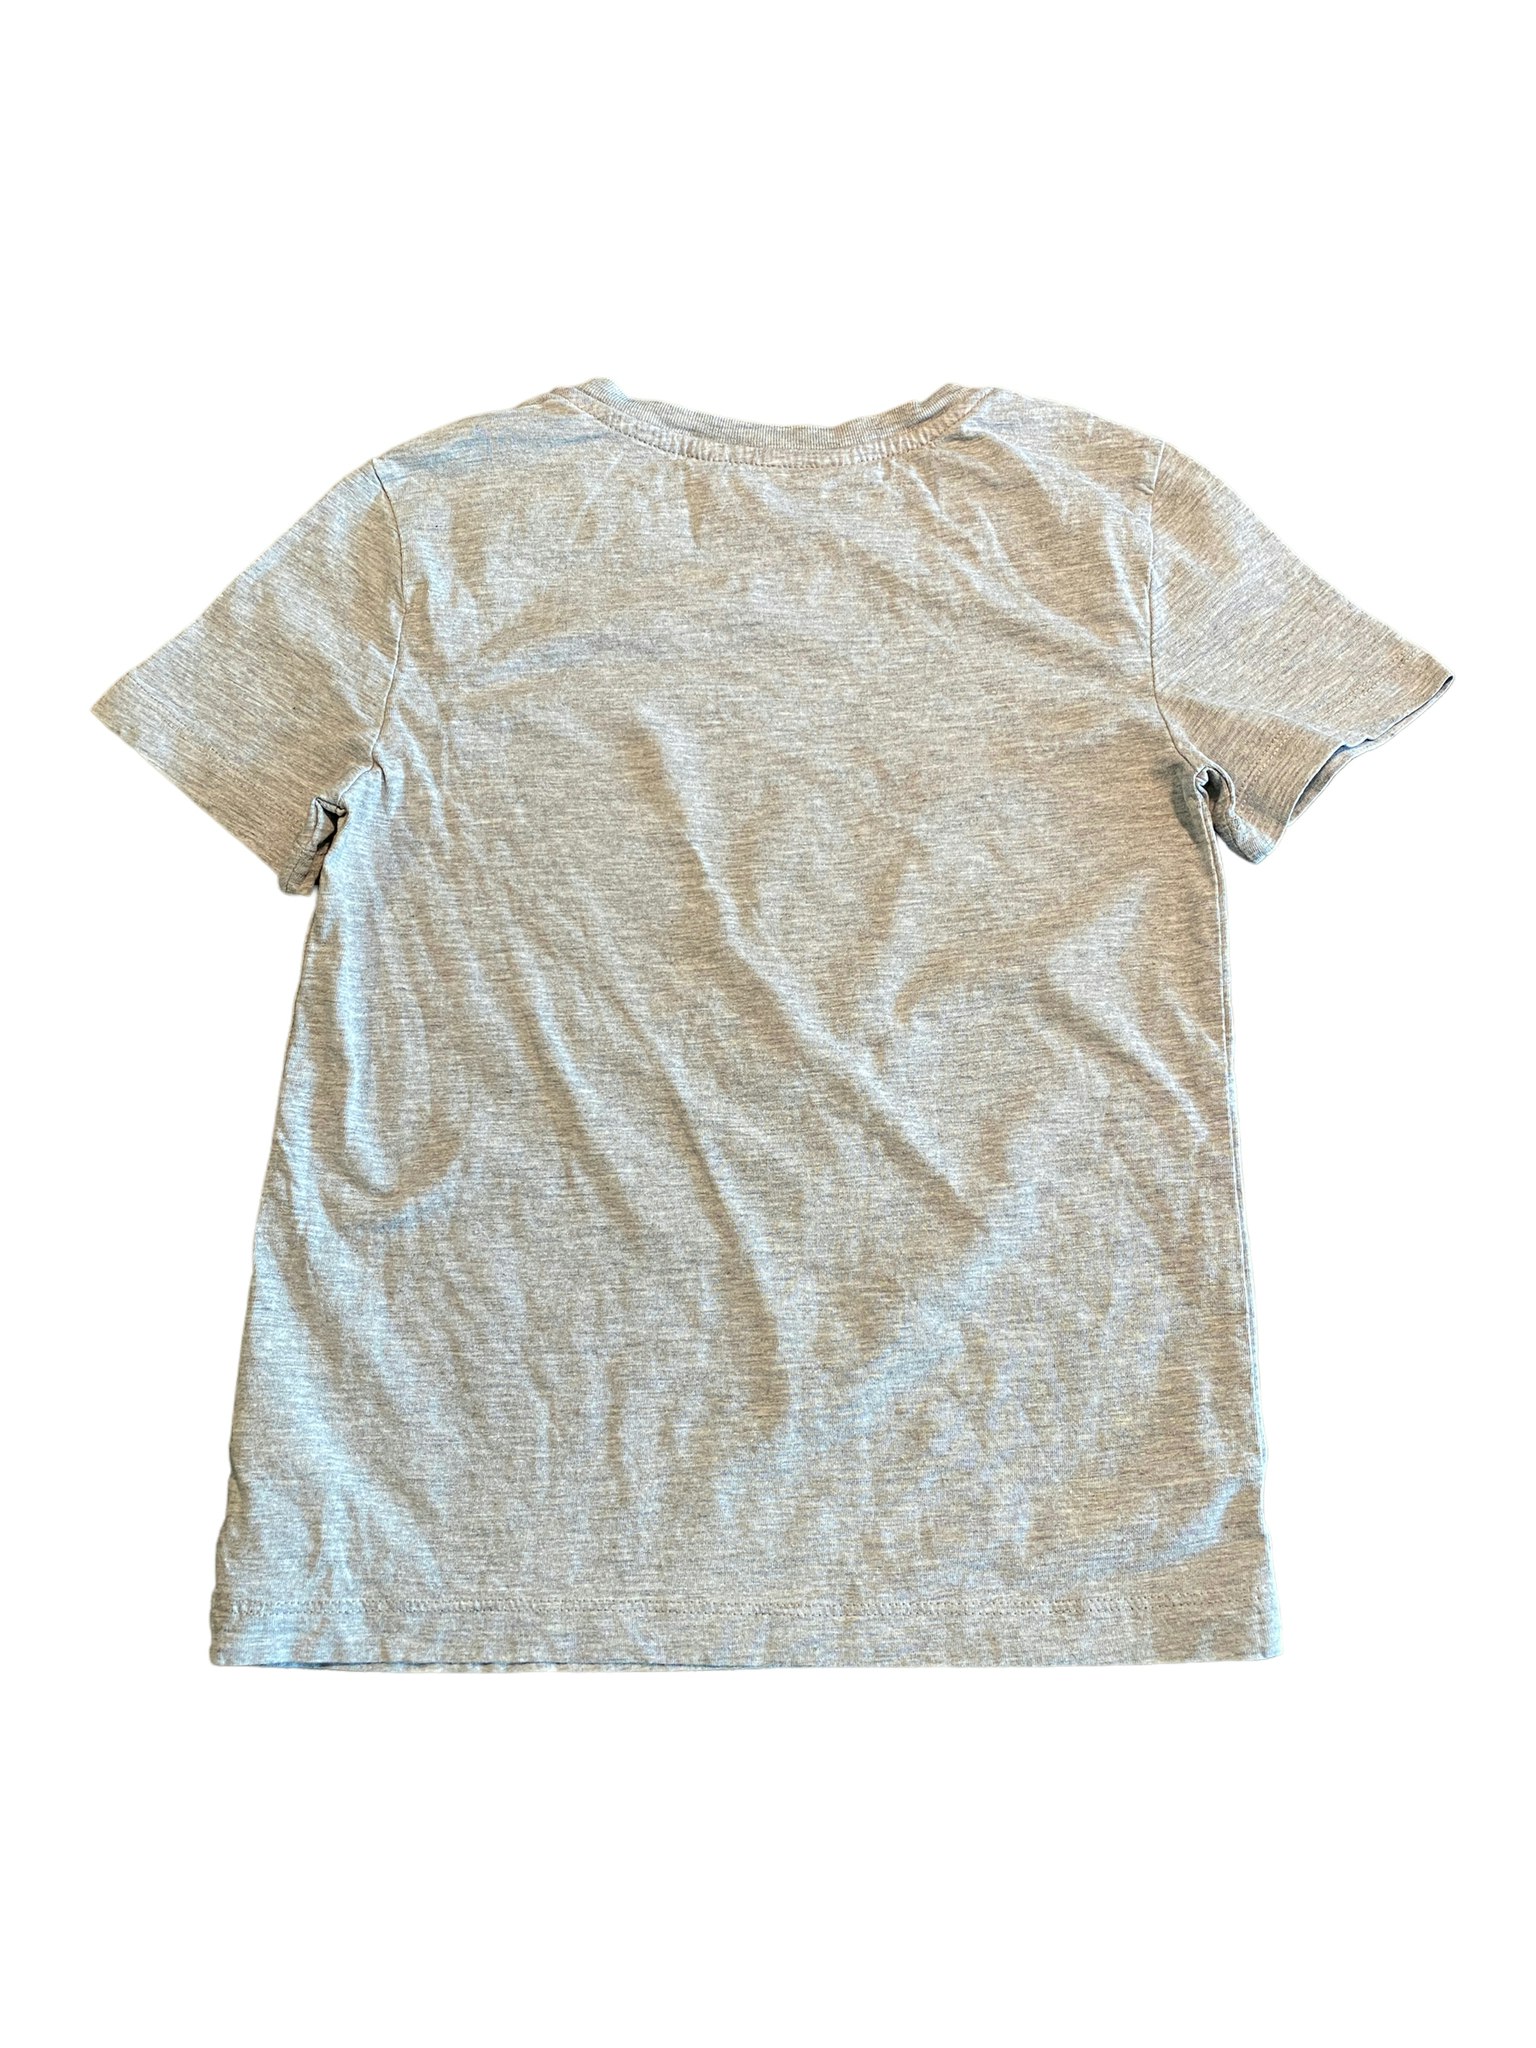 T-shirt, HM, stl 122/128